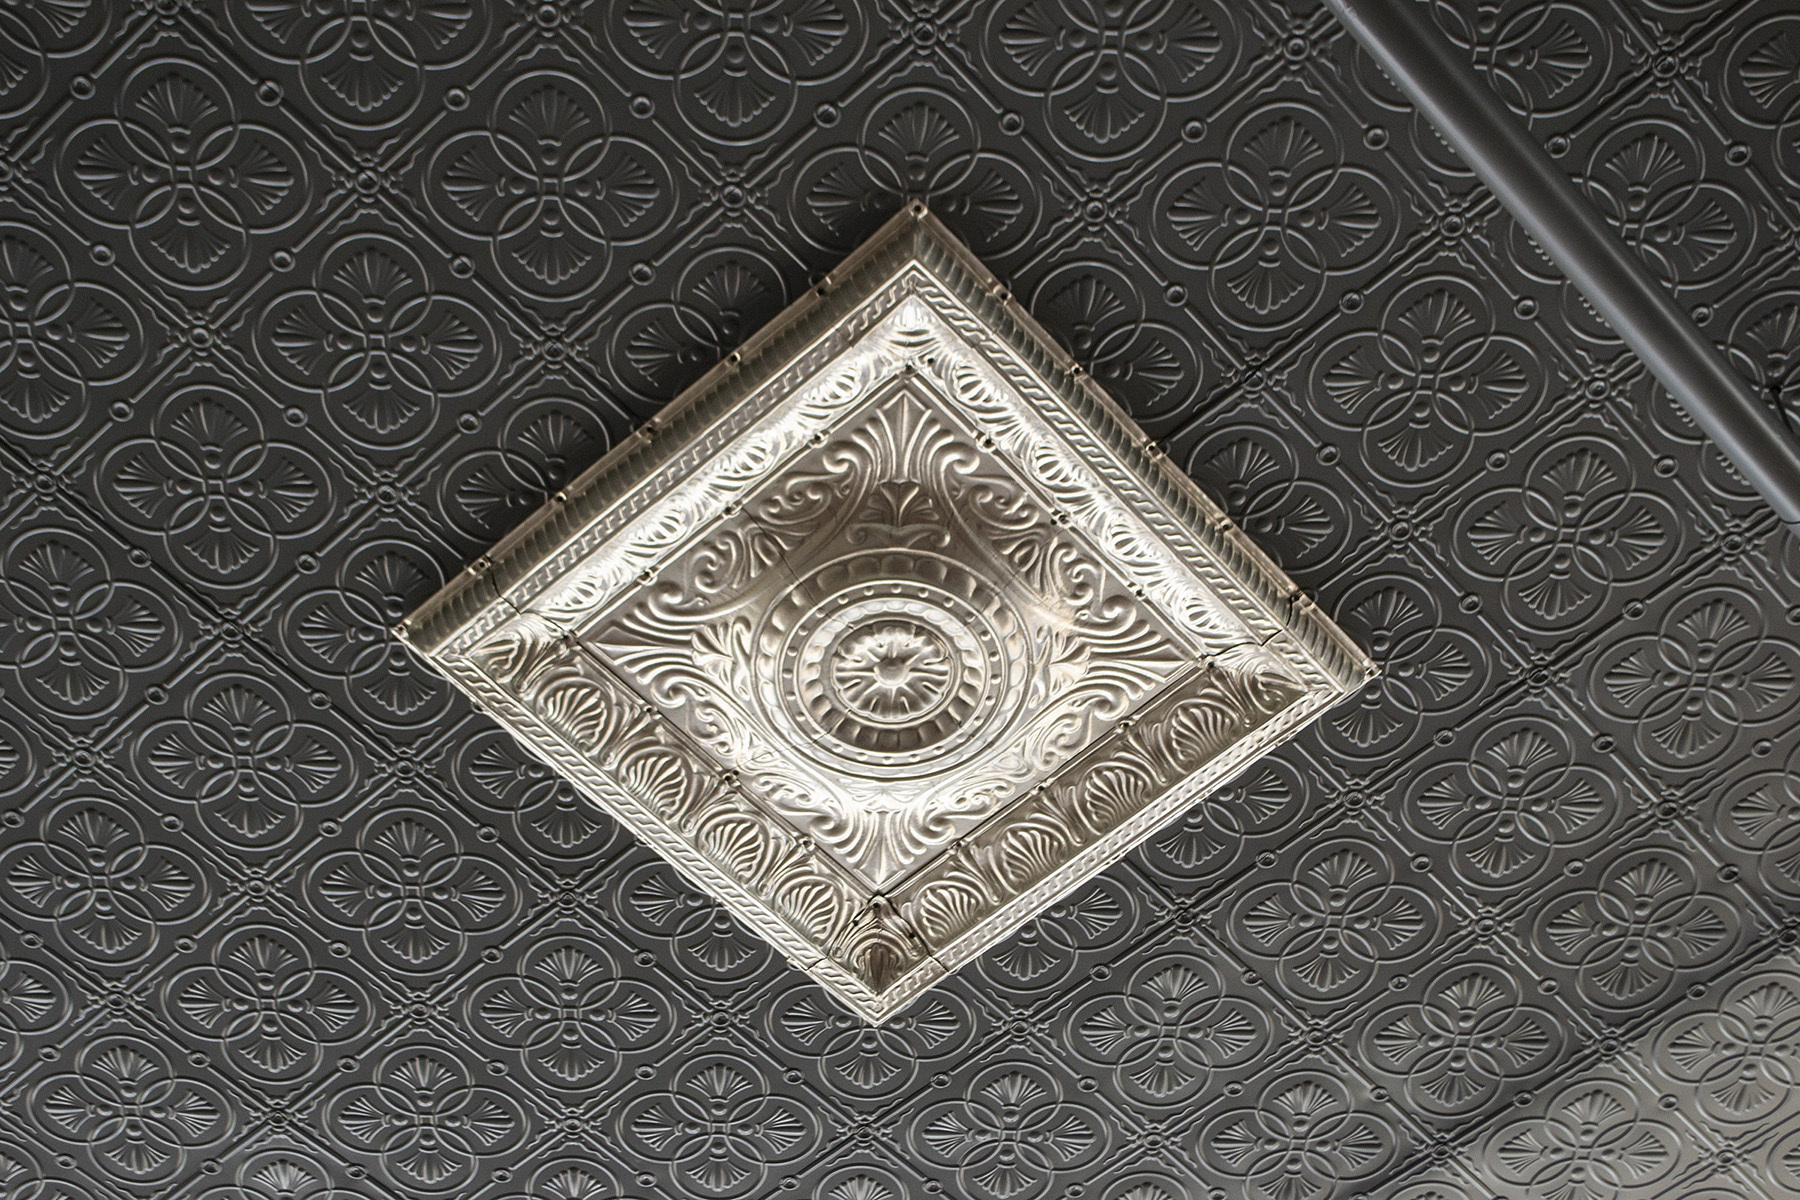 Ceiling Tile Detail 2